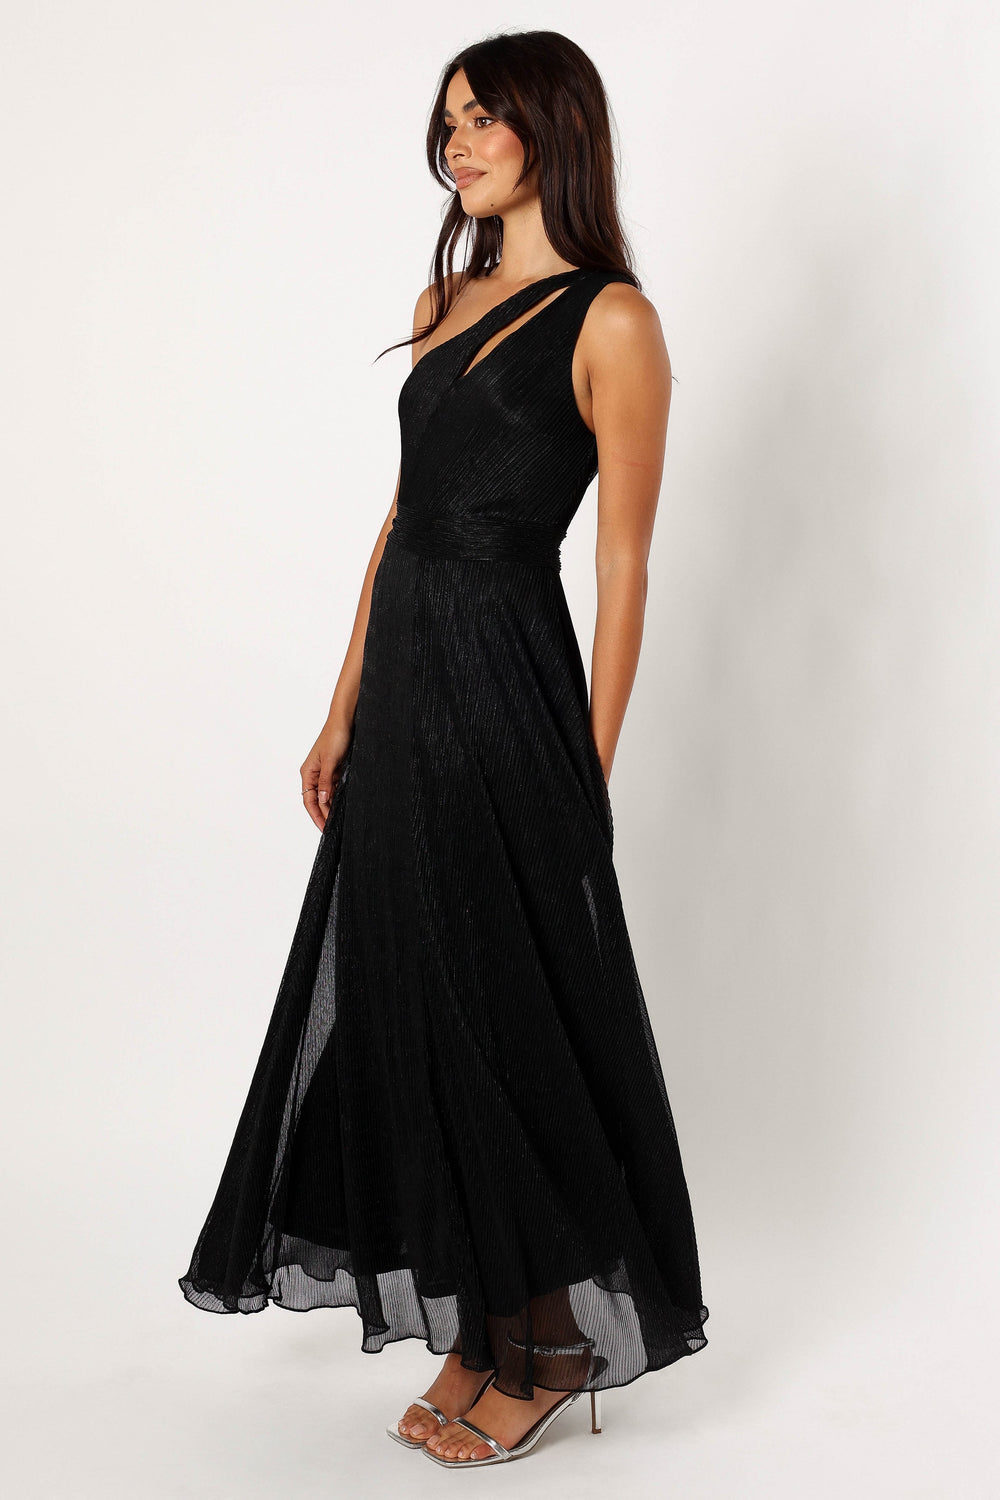 Shop Formal Dress - Watson One Shoulder Maxi Dress - Black Sparkle third image